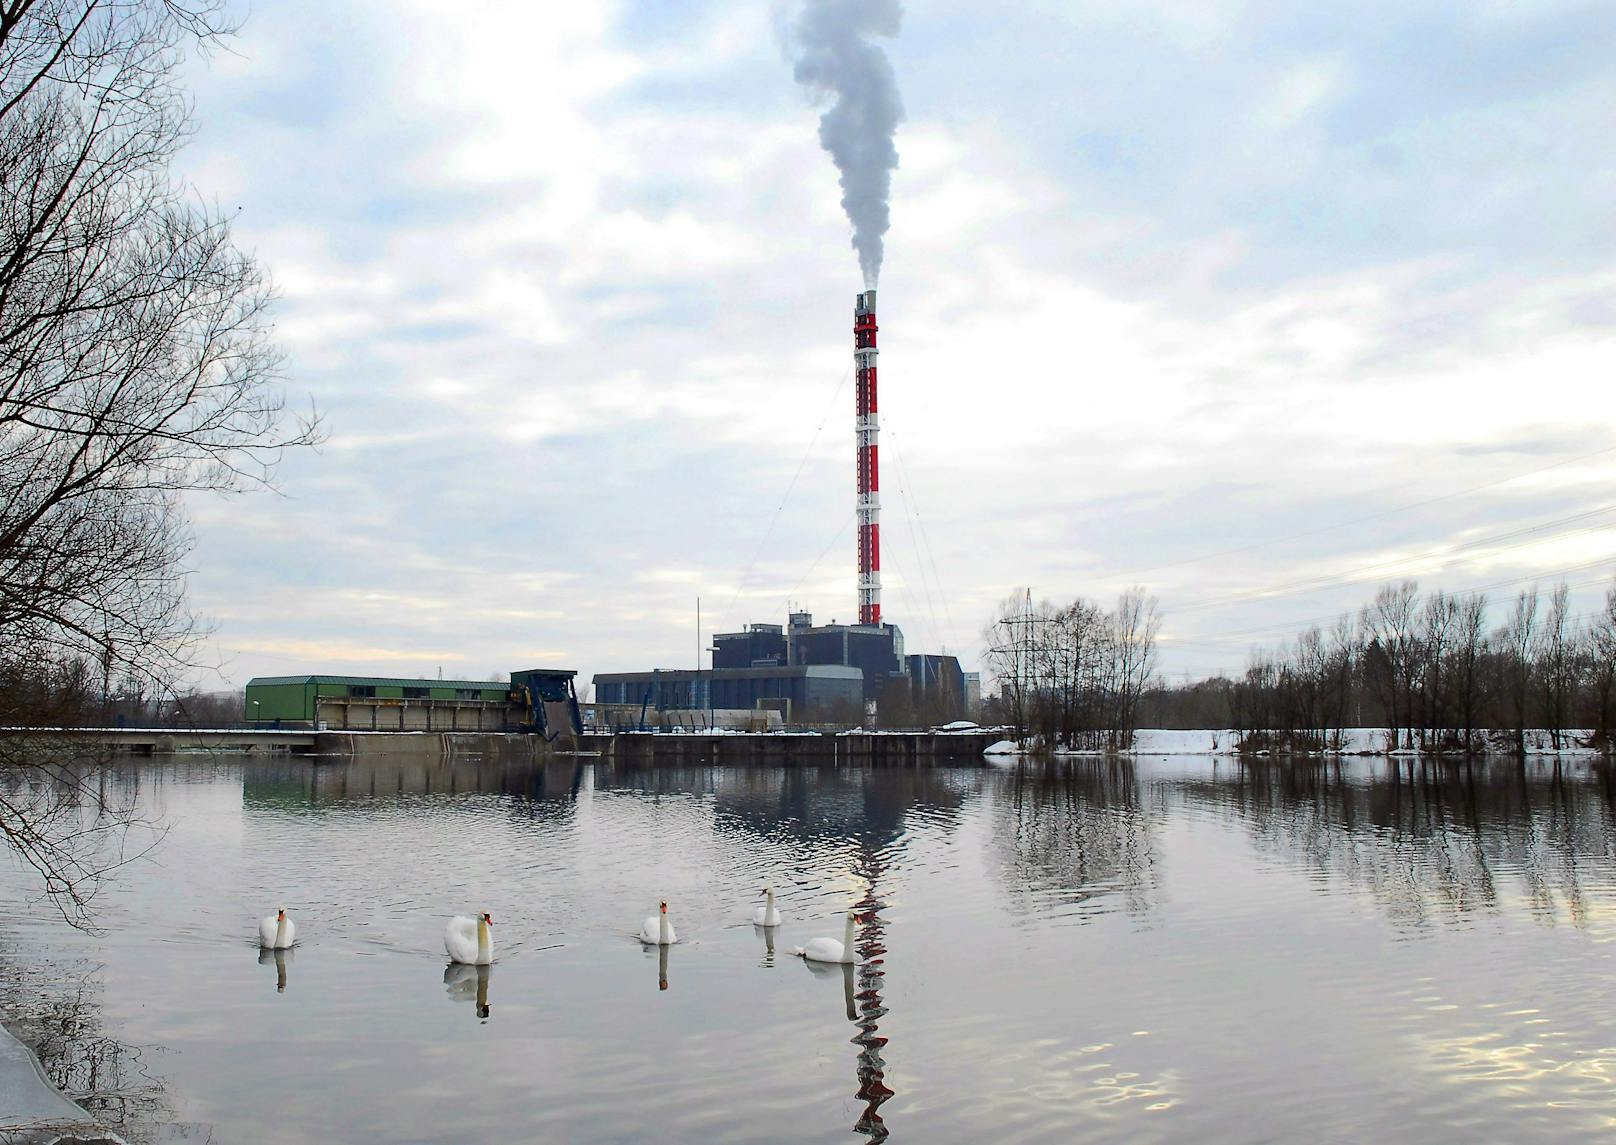 Letzter Ausweg Kohle – doch im Kraftwerk fehlt Personal